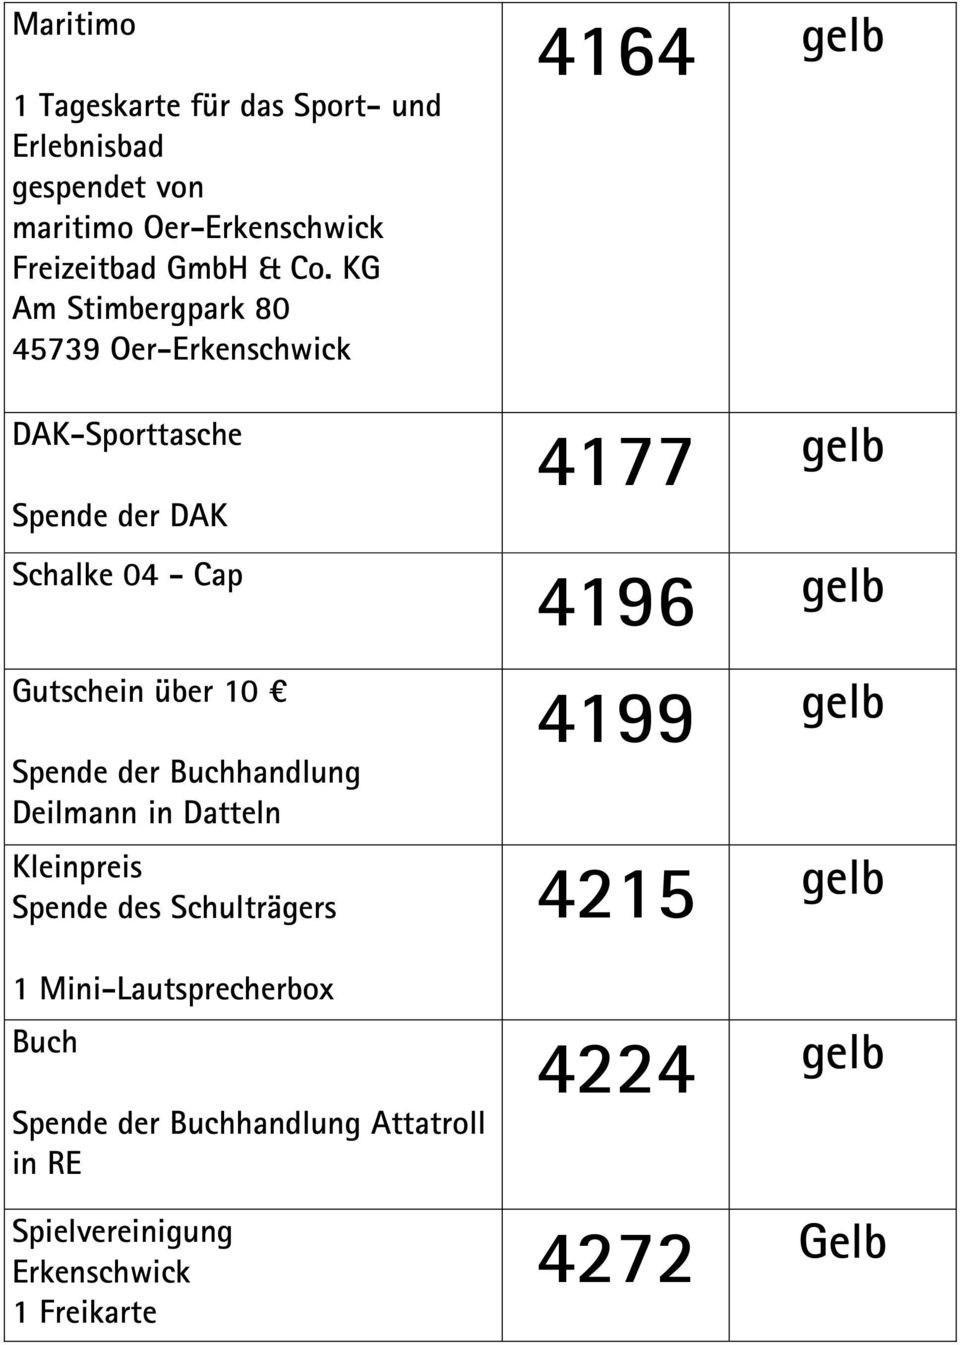 KG Am Stimbergpark 80 45739 Oer- DAK-Sporttasche Spende der DAK Schalke 04 - Cap